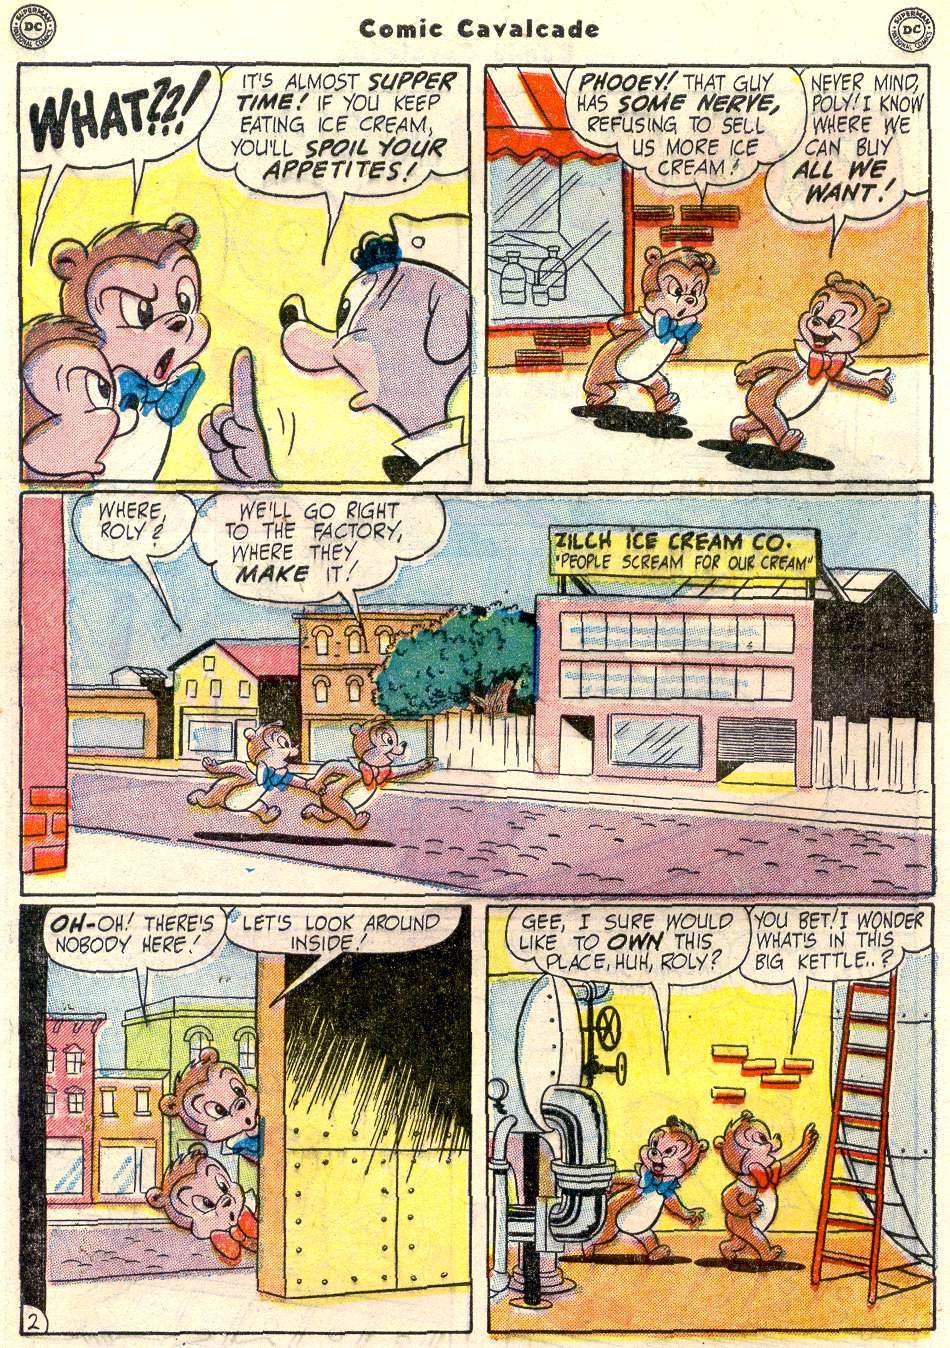 Comic Cavalcade issue 43 - Page 22